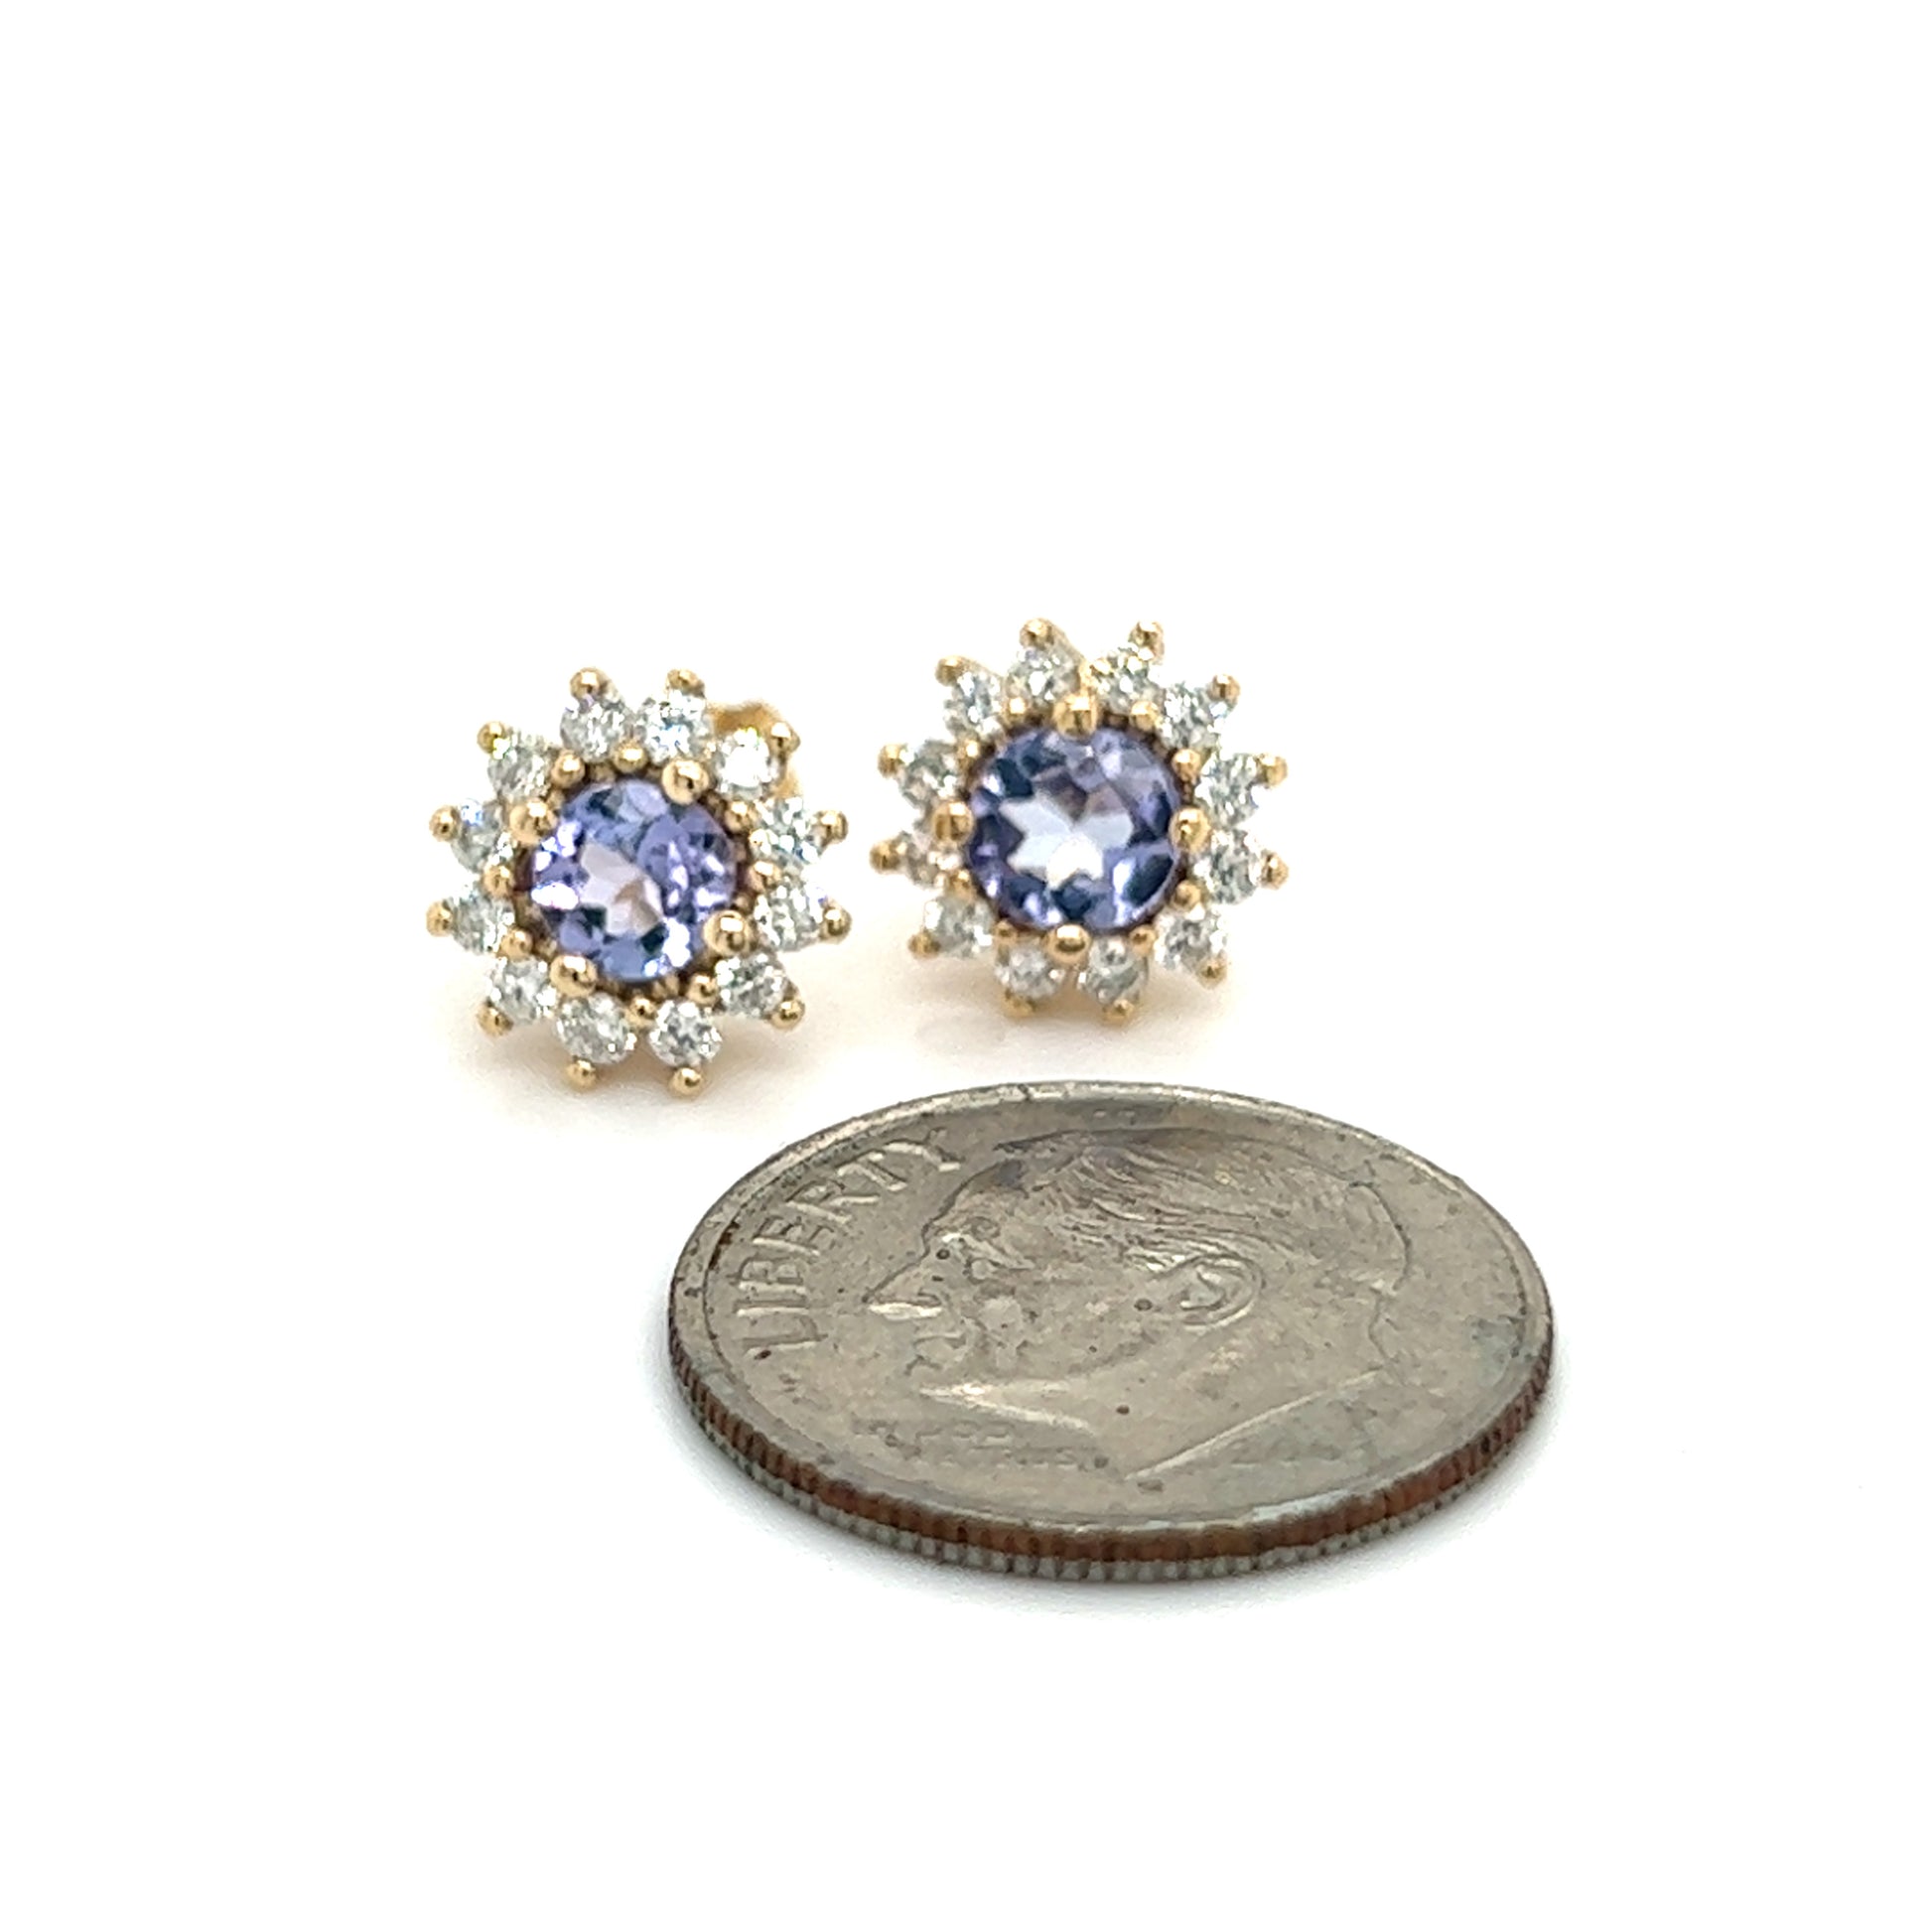 Natural Tanzanite Diamond Stud Earrings 14k Y Gold 1.18 TCW Certified $3,790 211353 - Certified Estate Jewelry